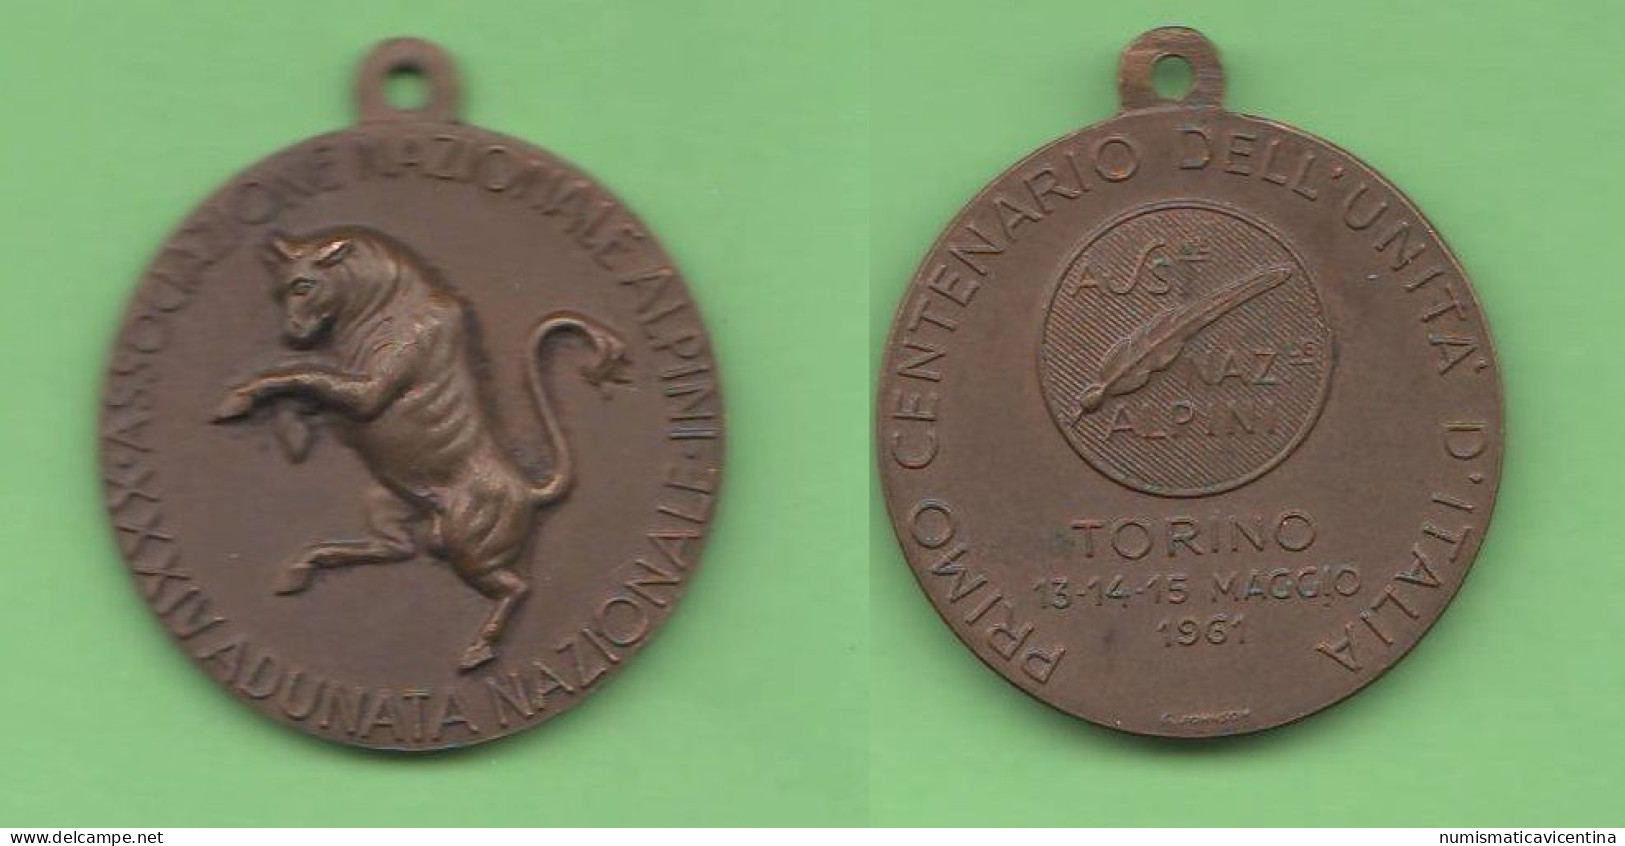 Torino Medaglia Adunata Nazionale Alpini 1961 ANA Marcata Johnson - Italien